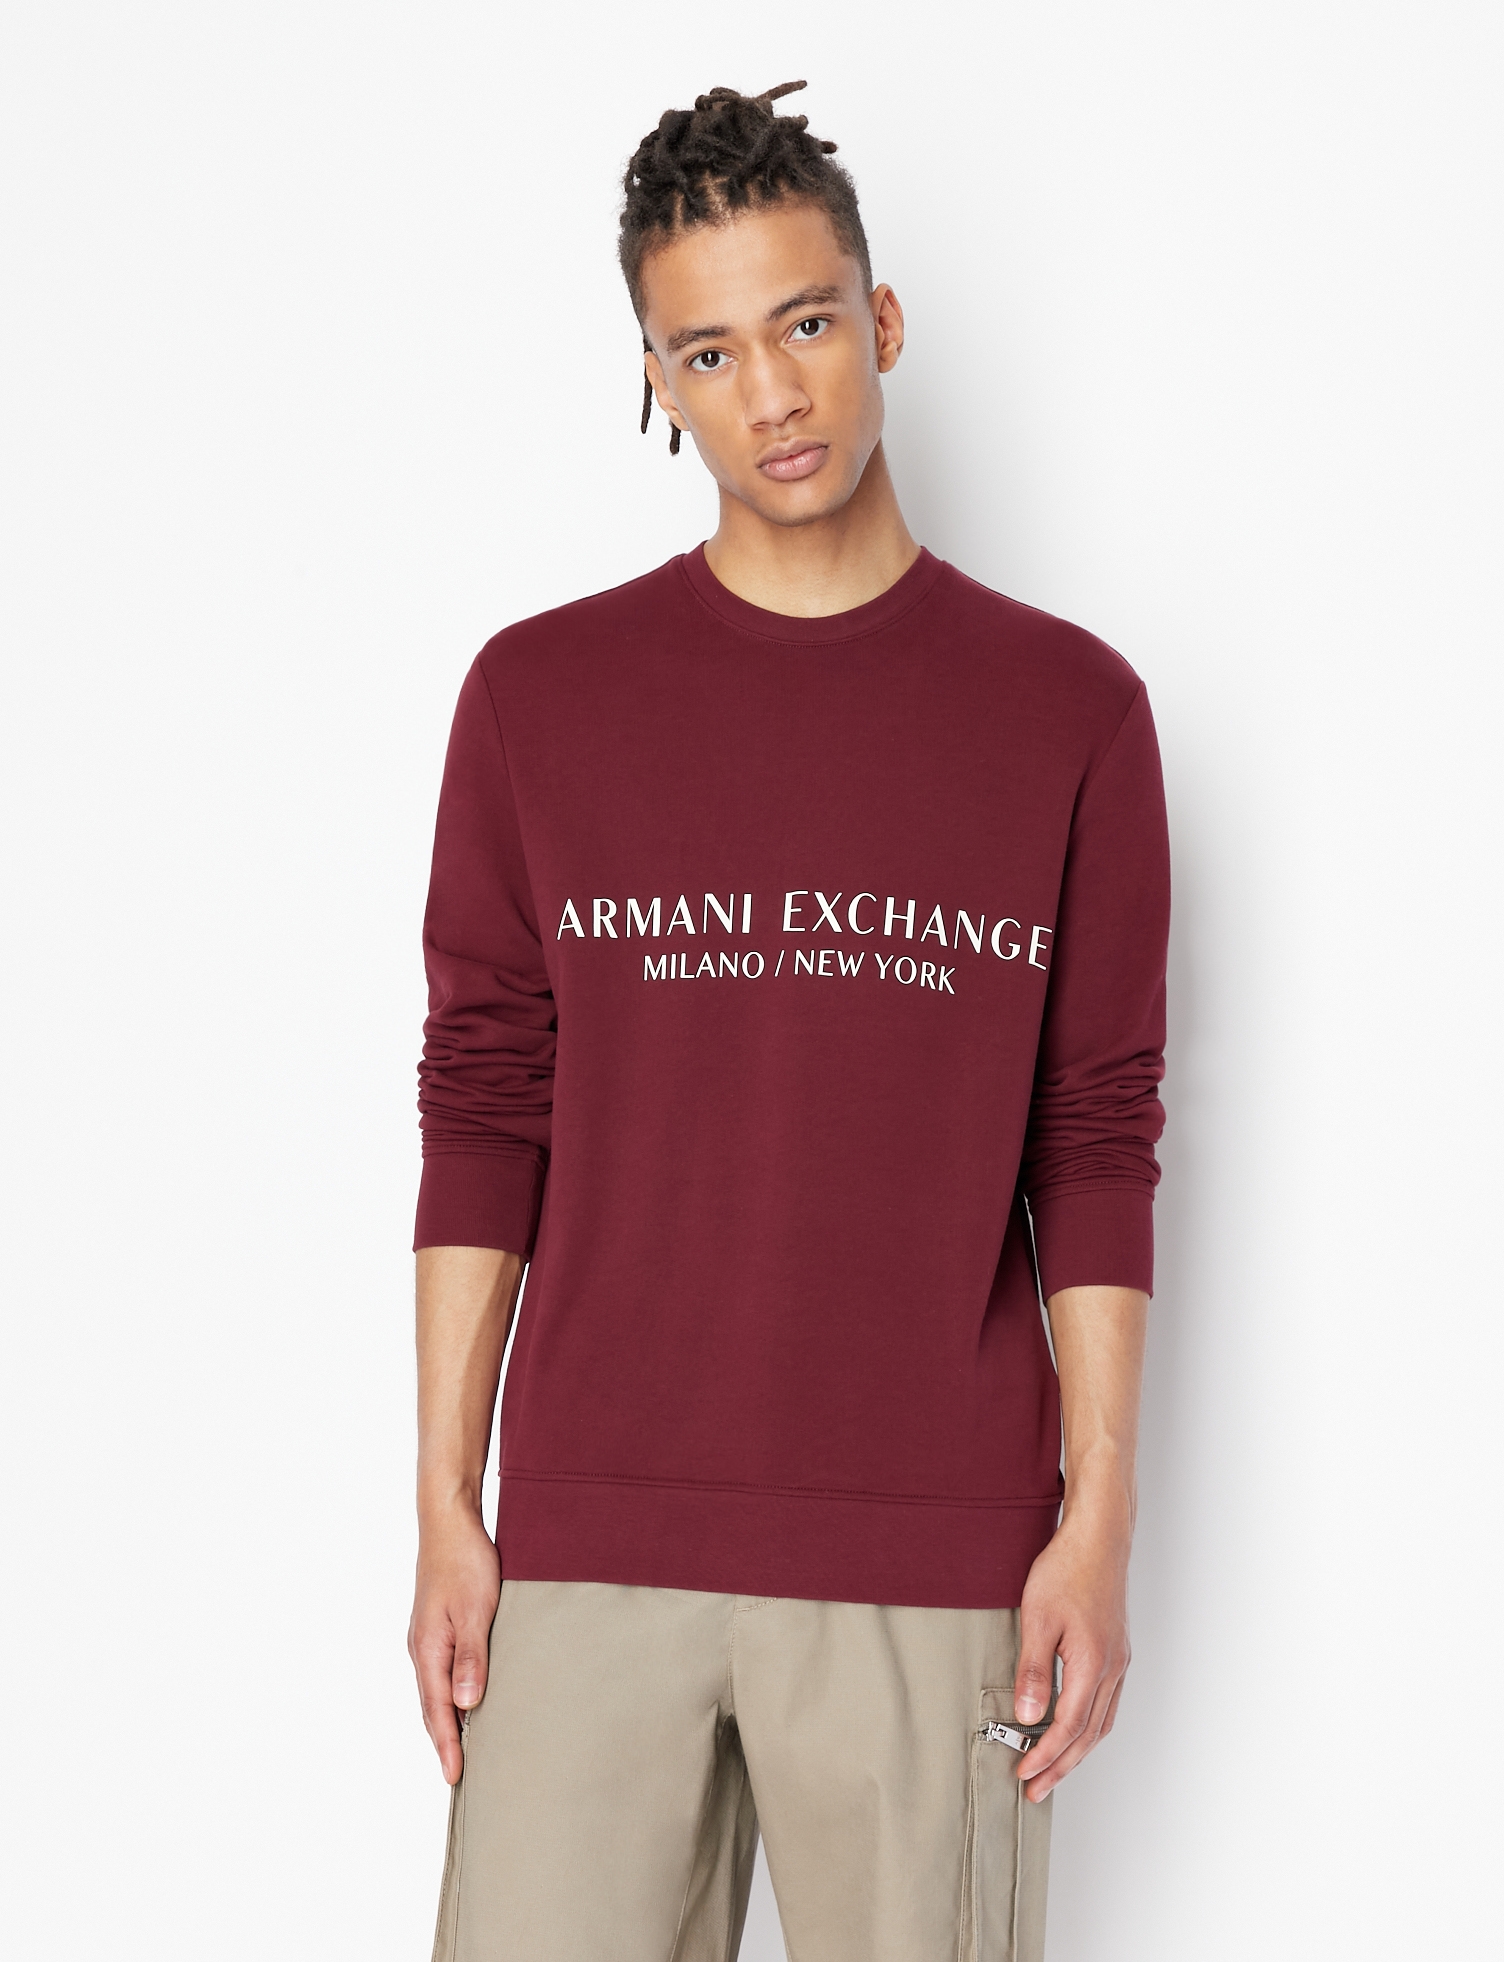 Armani Exchange Milano New York Crew Neck Logo Sweatshirt